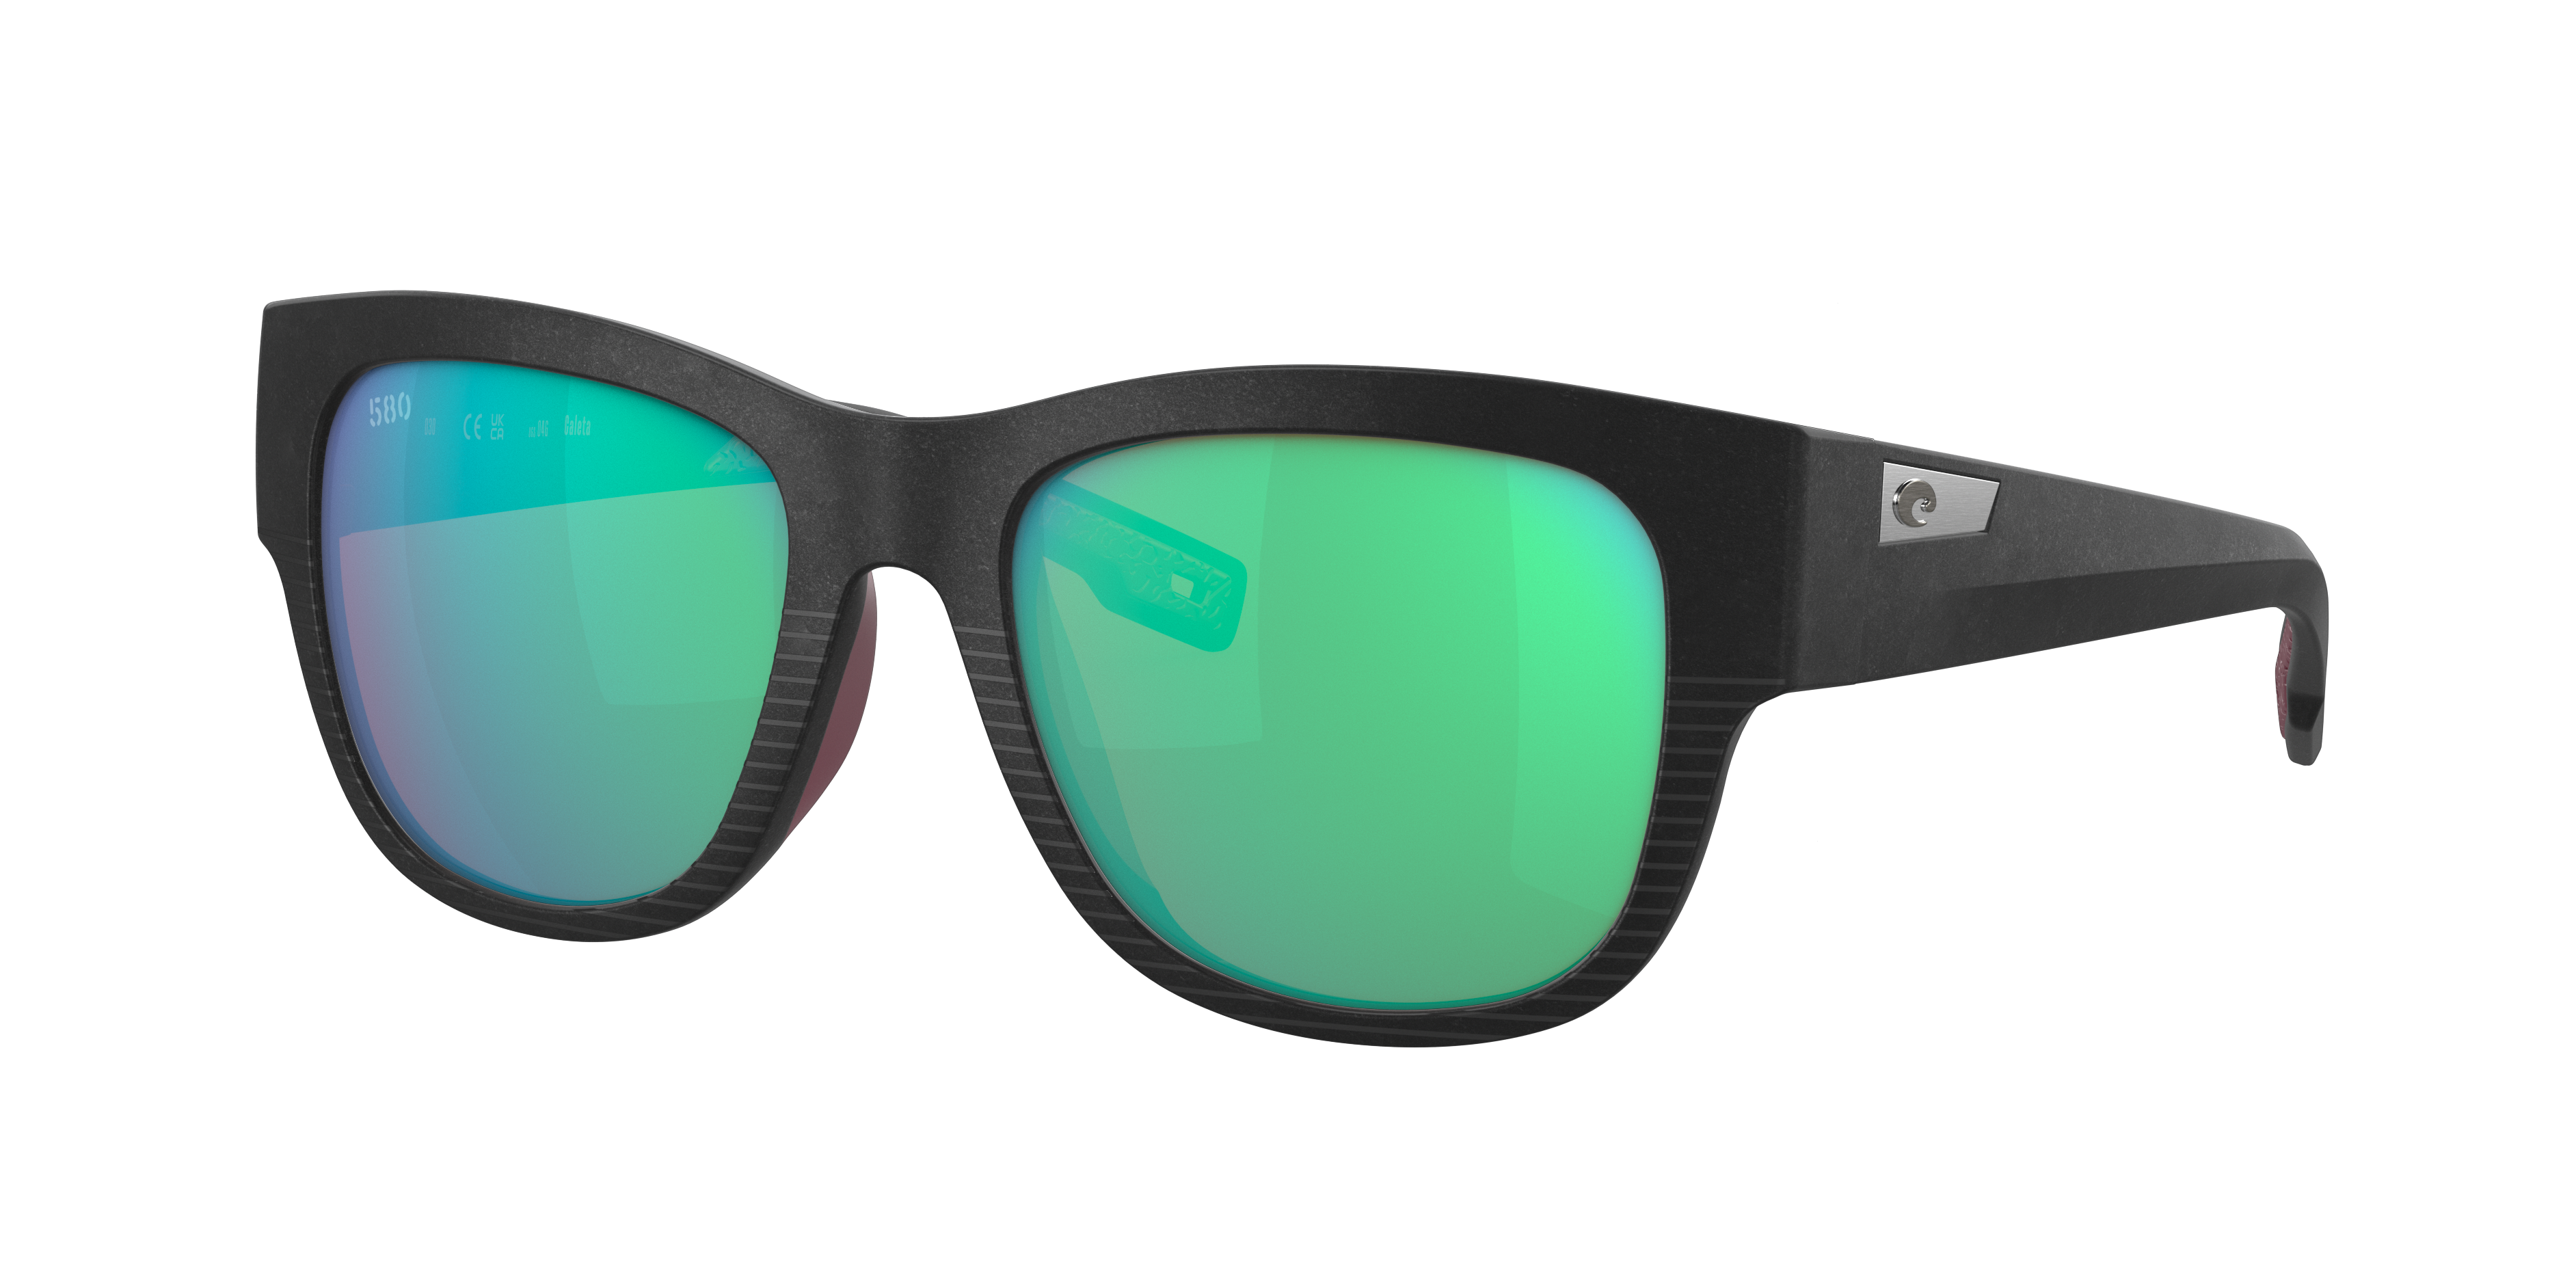 Costa 6S9030 Baffin 58 Green Mirror  Net Gray With Gray Rubber Polarized  Sunglasses | Sunglass Hut USA